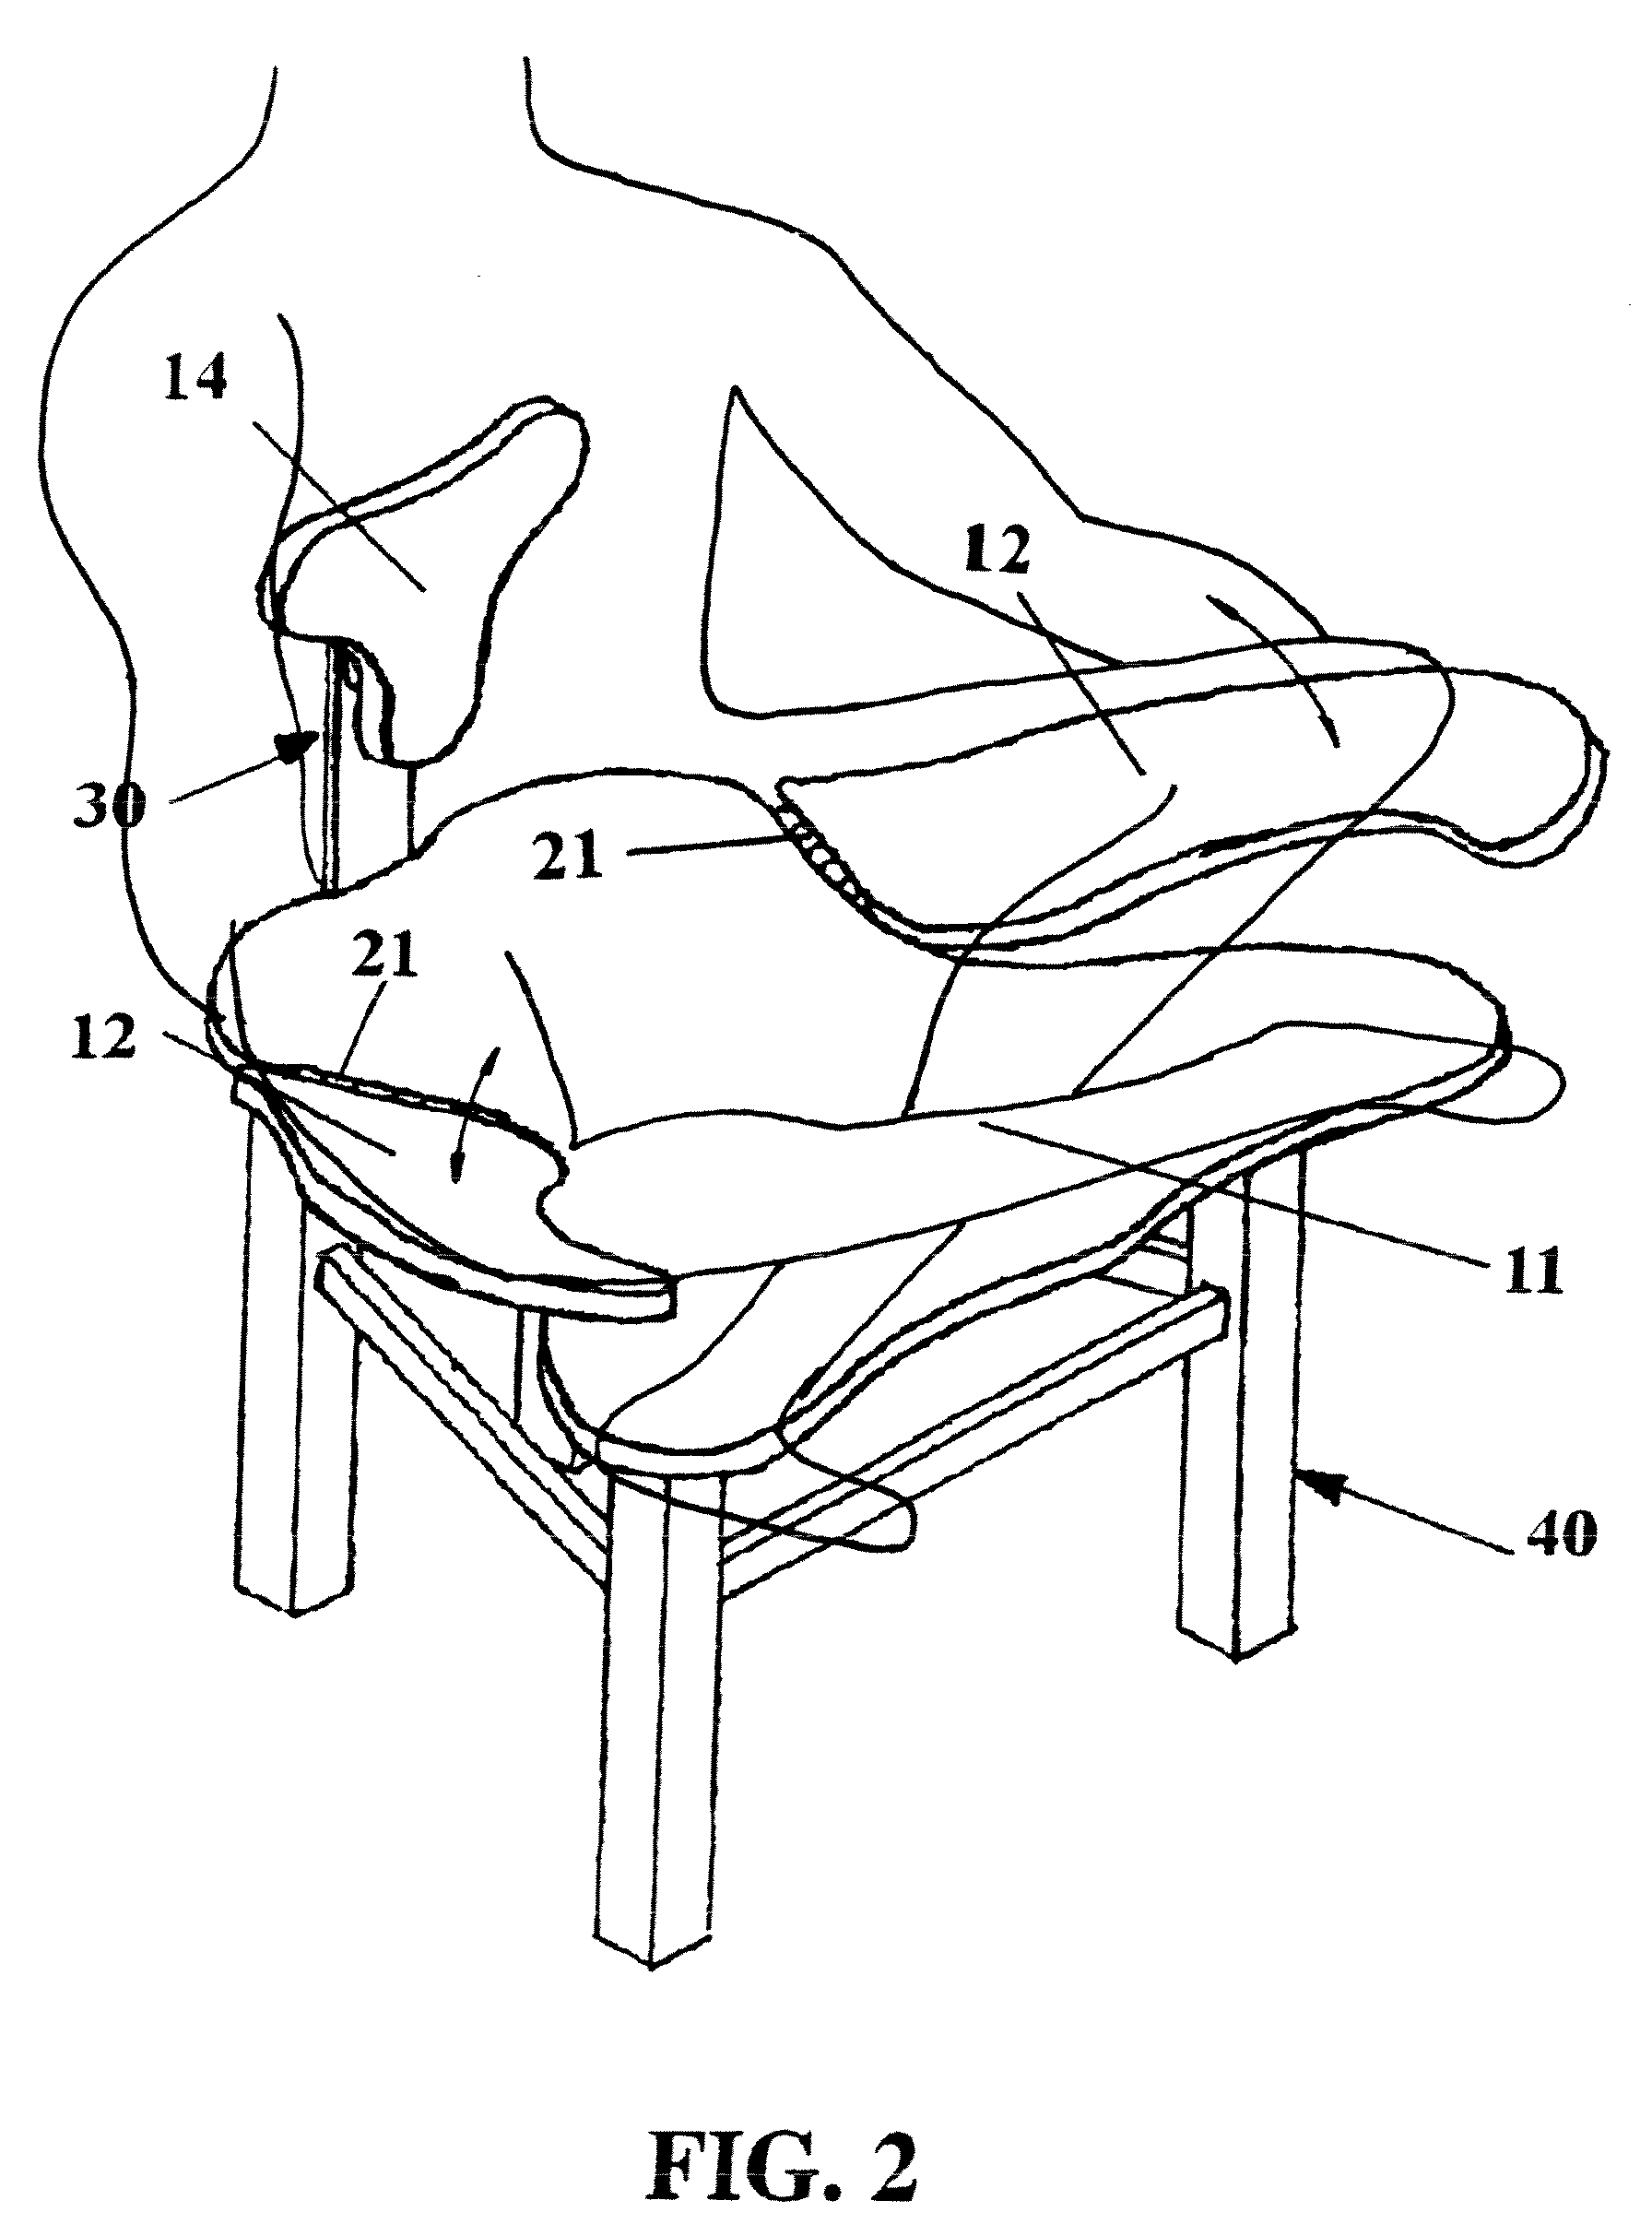 Adjustable cross-legged support seat